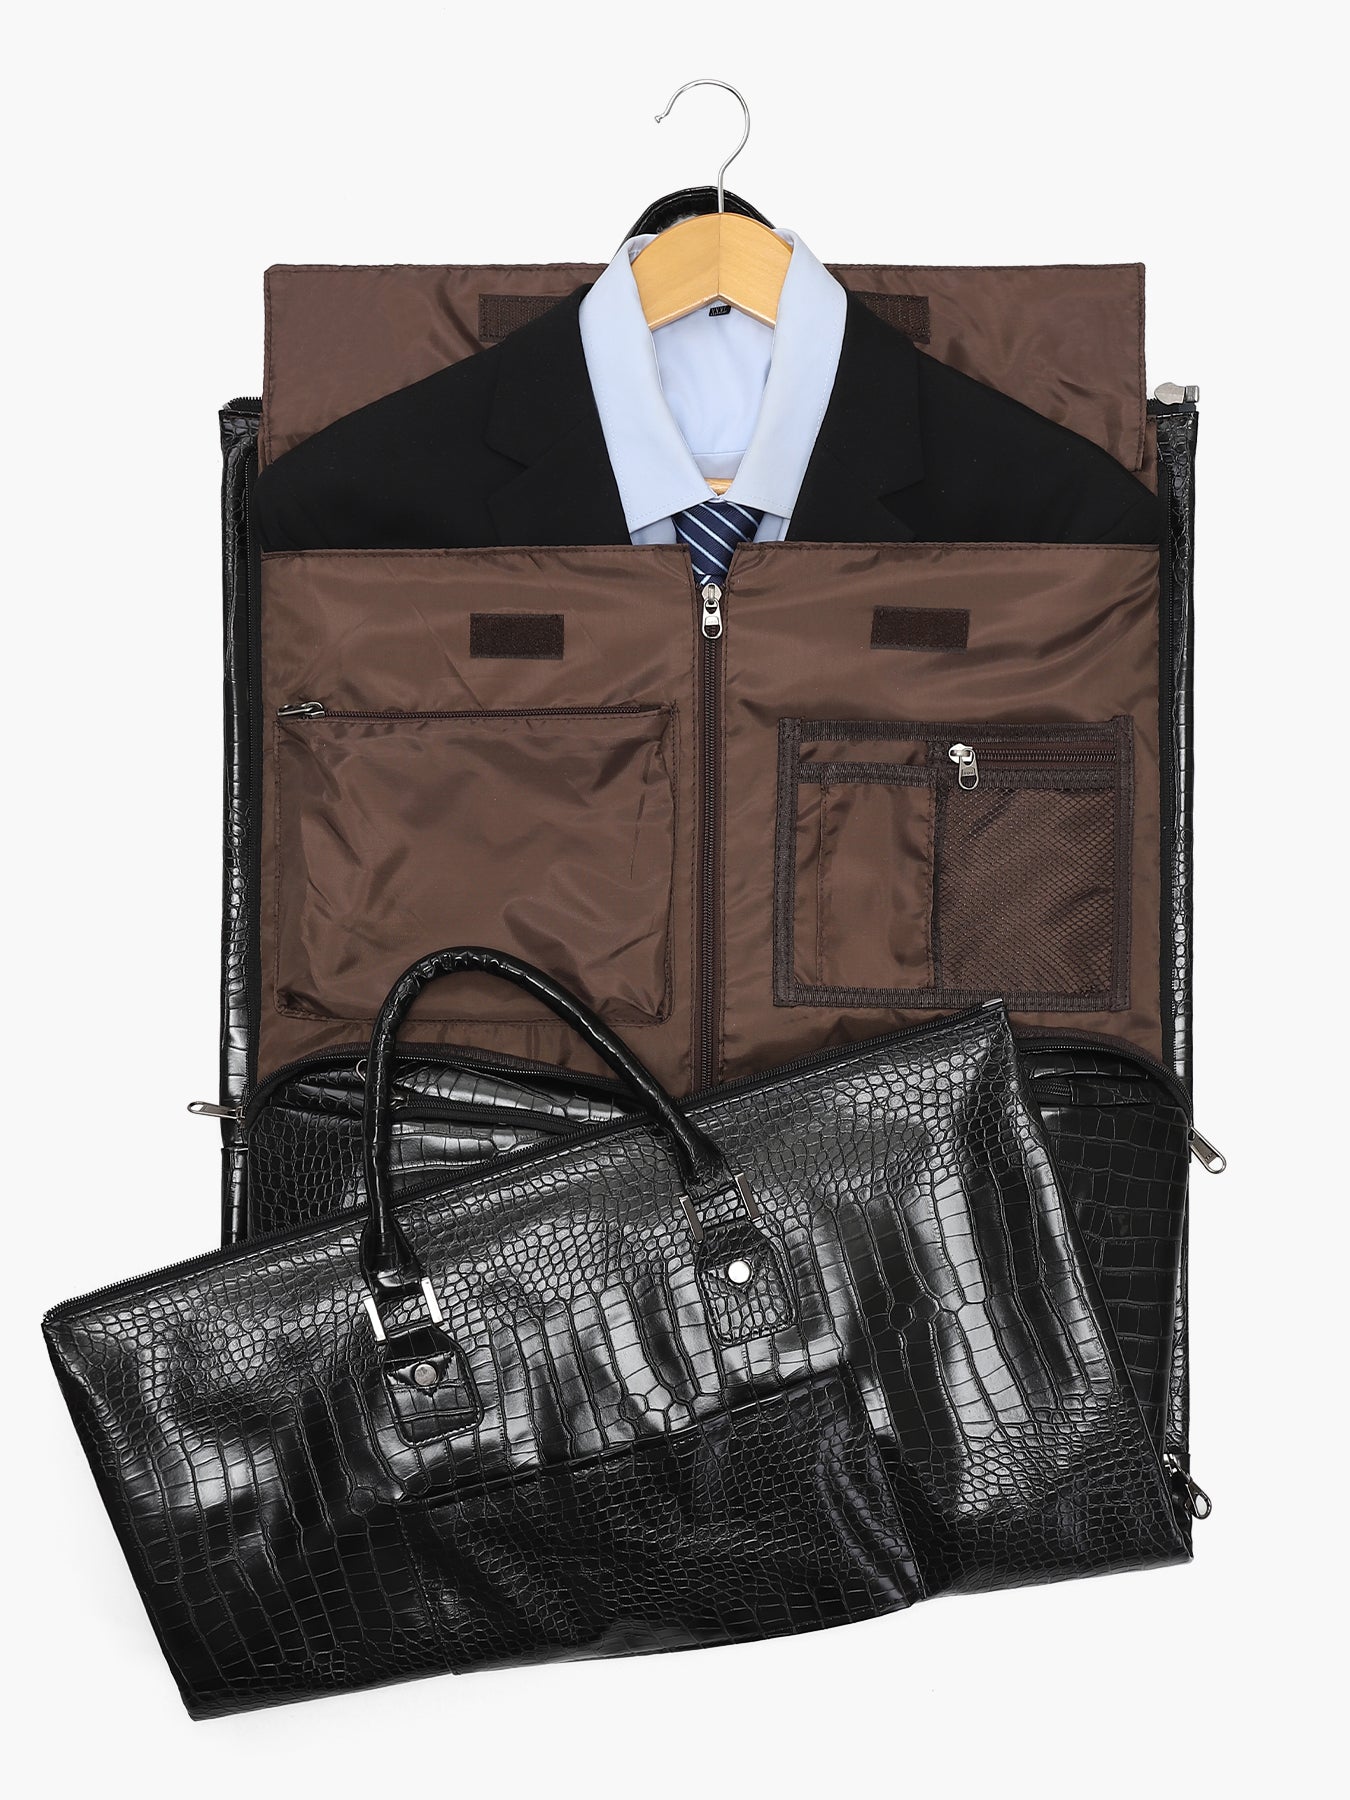 Convertible Garment Bag with Shoulder Strap, Modoker Carry on Garment Duffel Bag